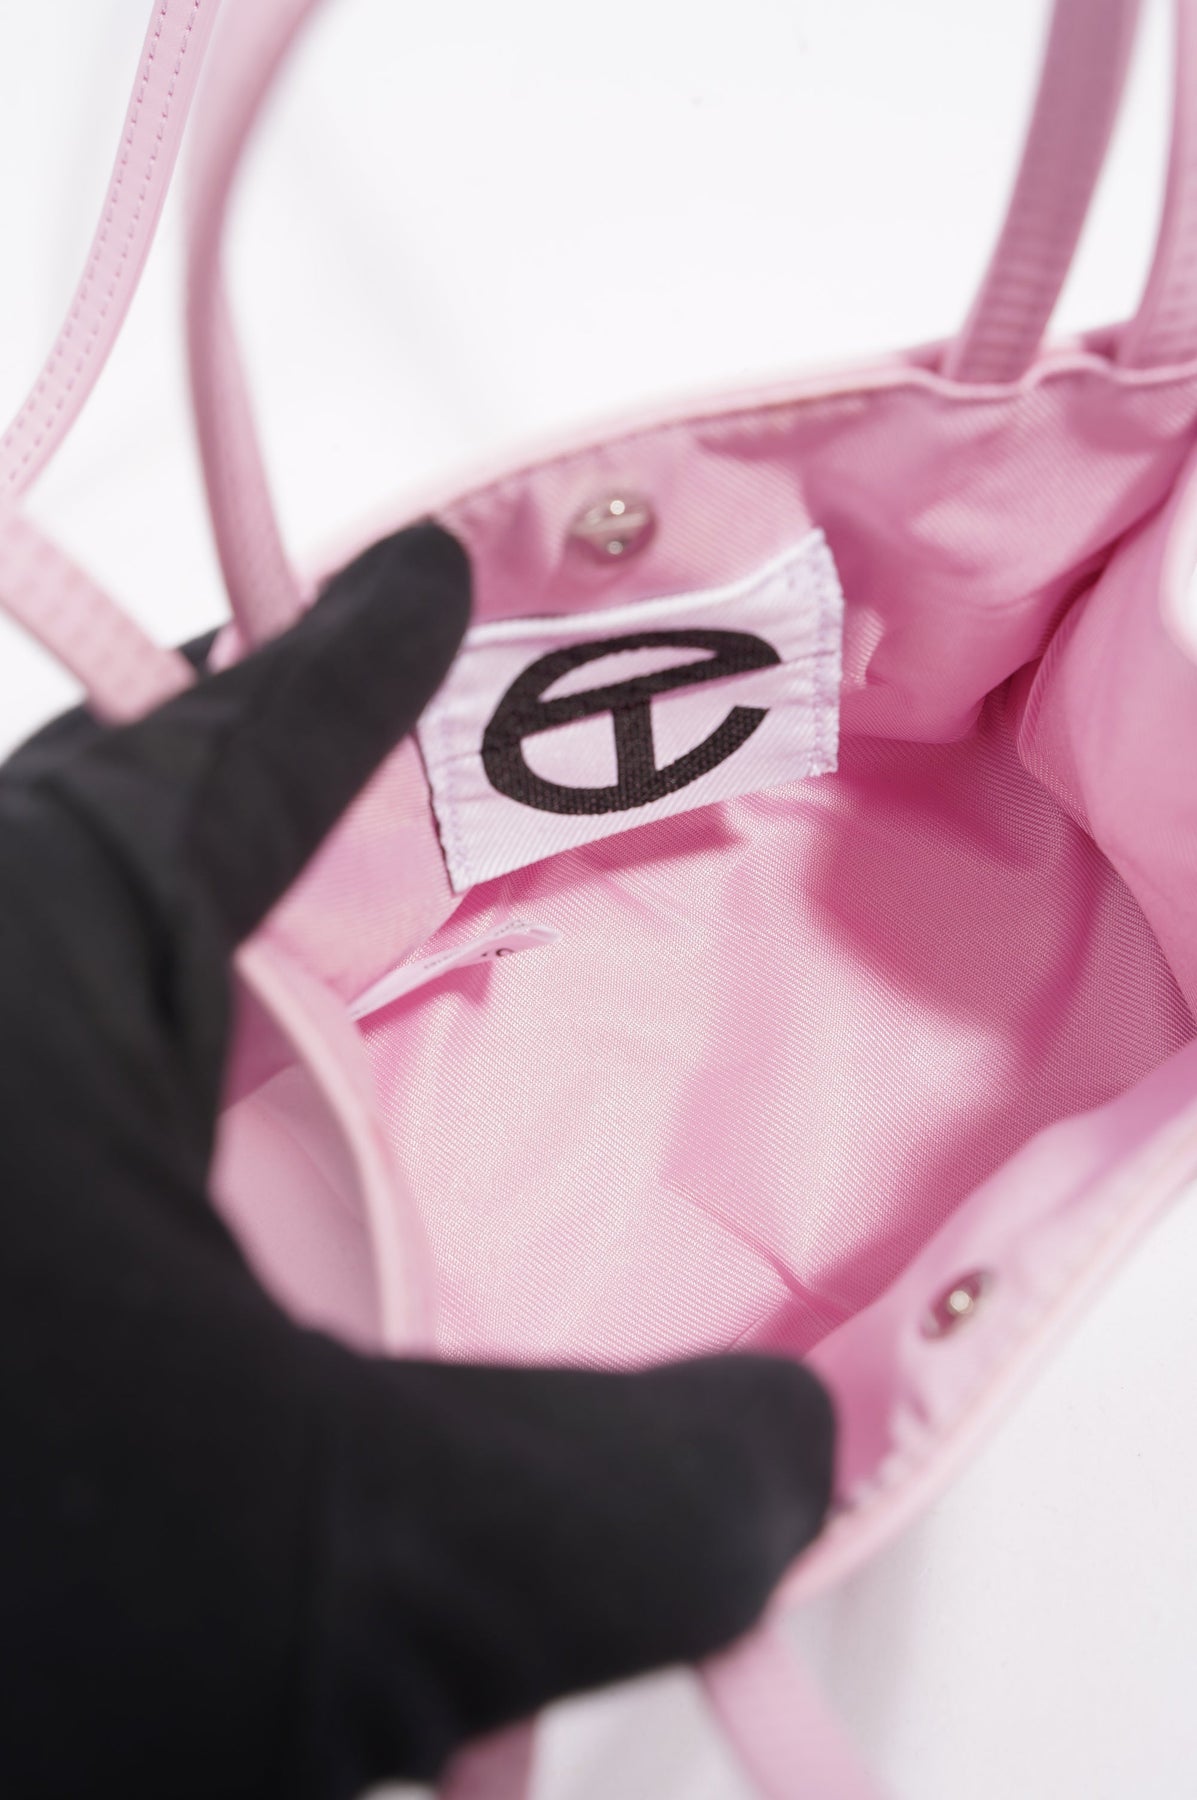 Small shopping bag handbag Telfar Pink in Plastic - 36106785